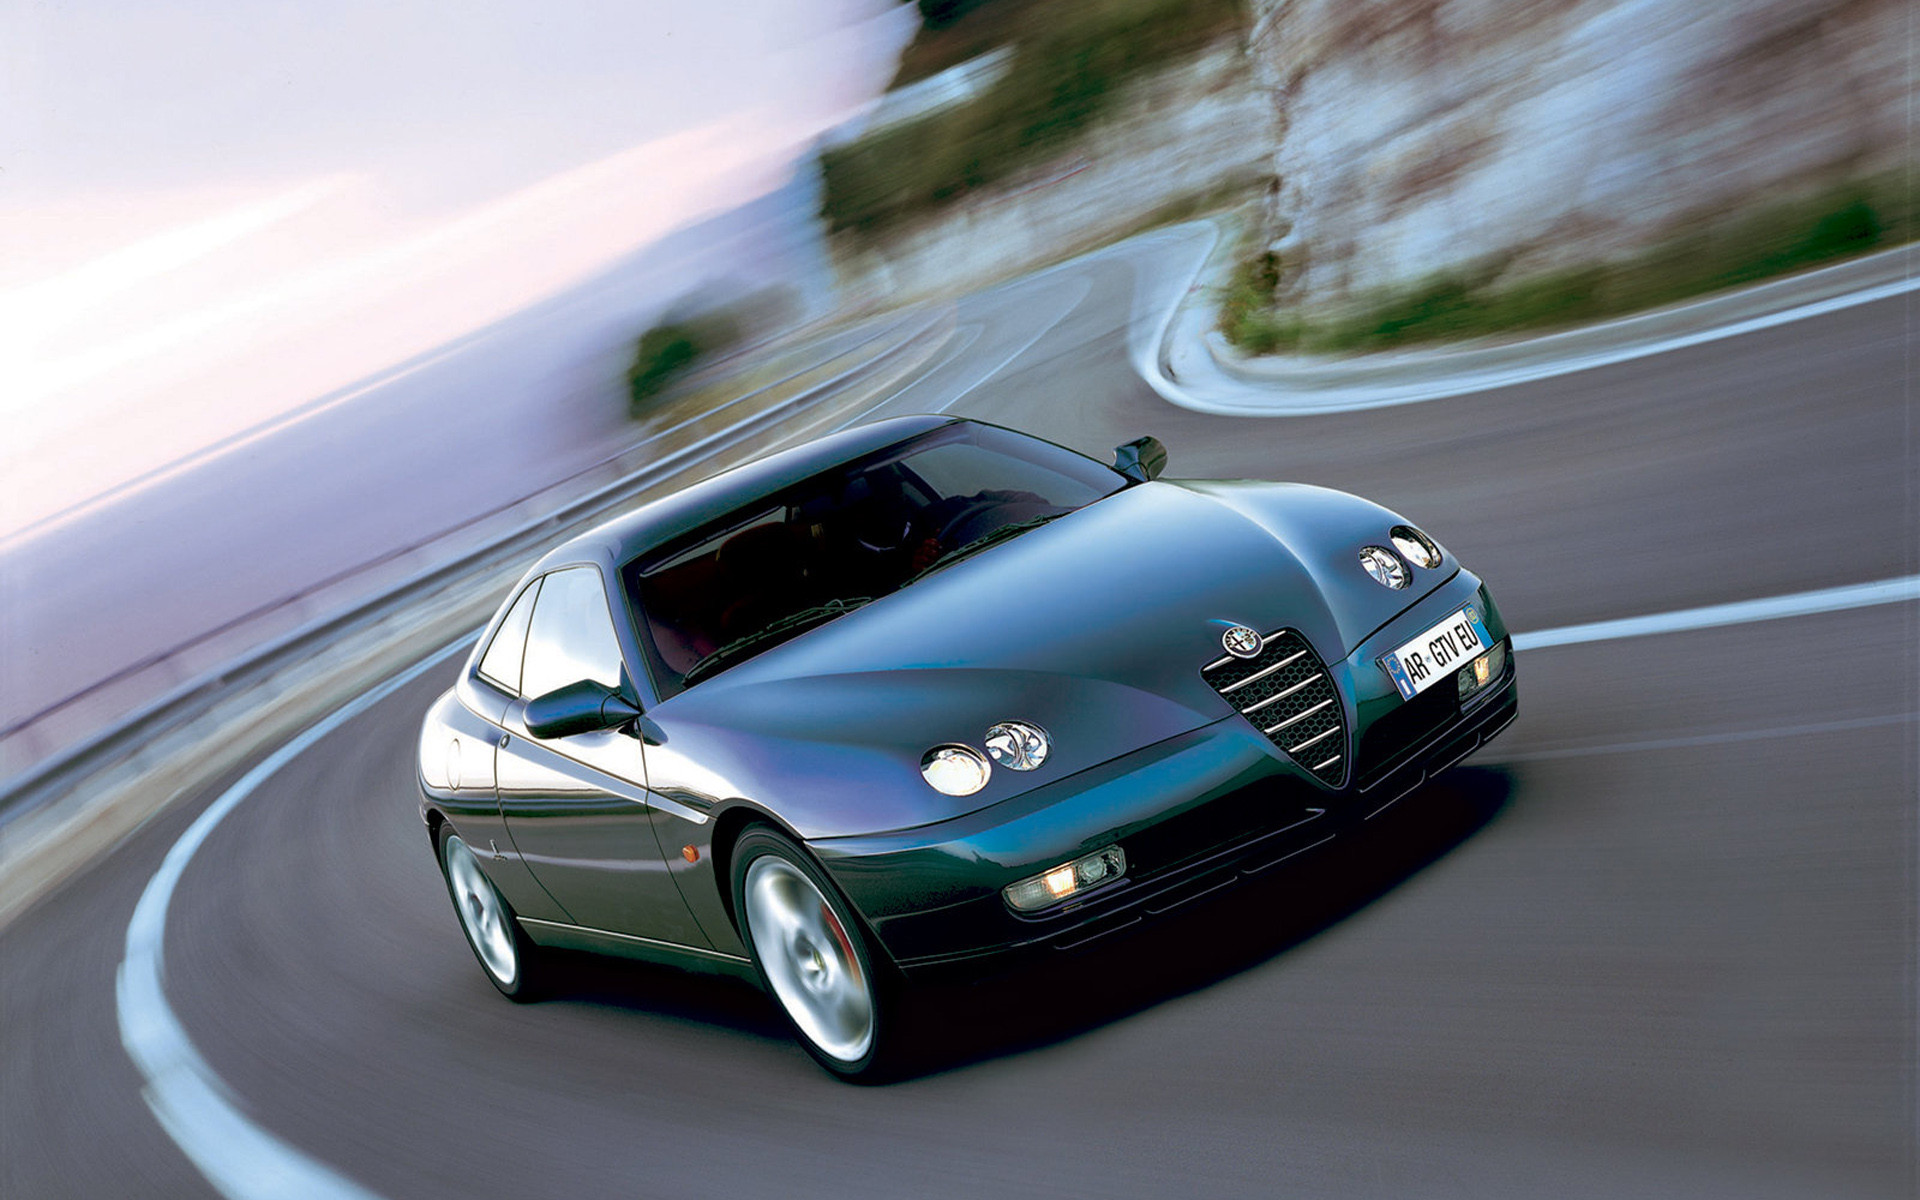  2003 Alfa Romeo GTV Wallpaper.